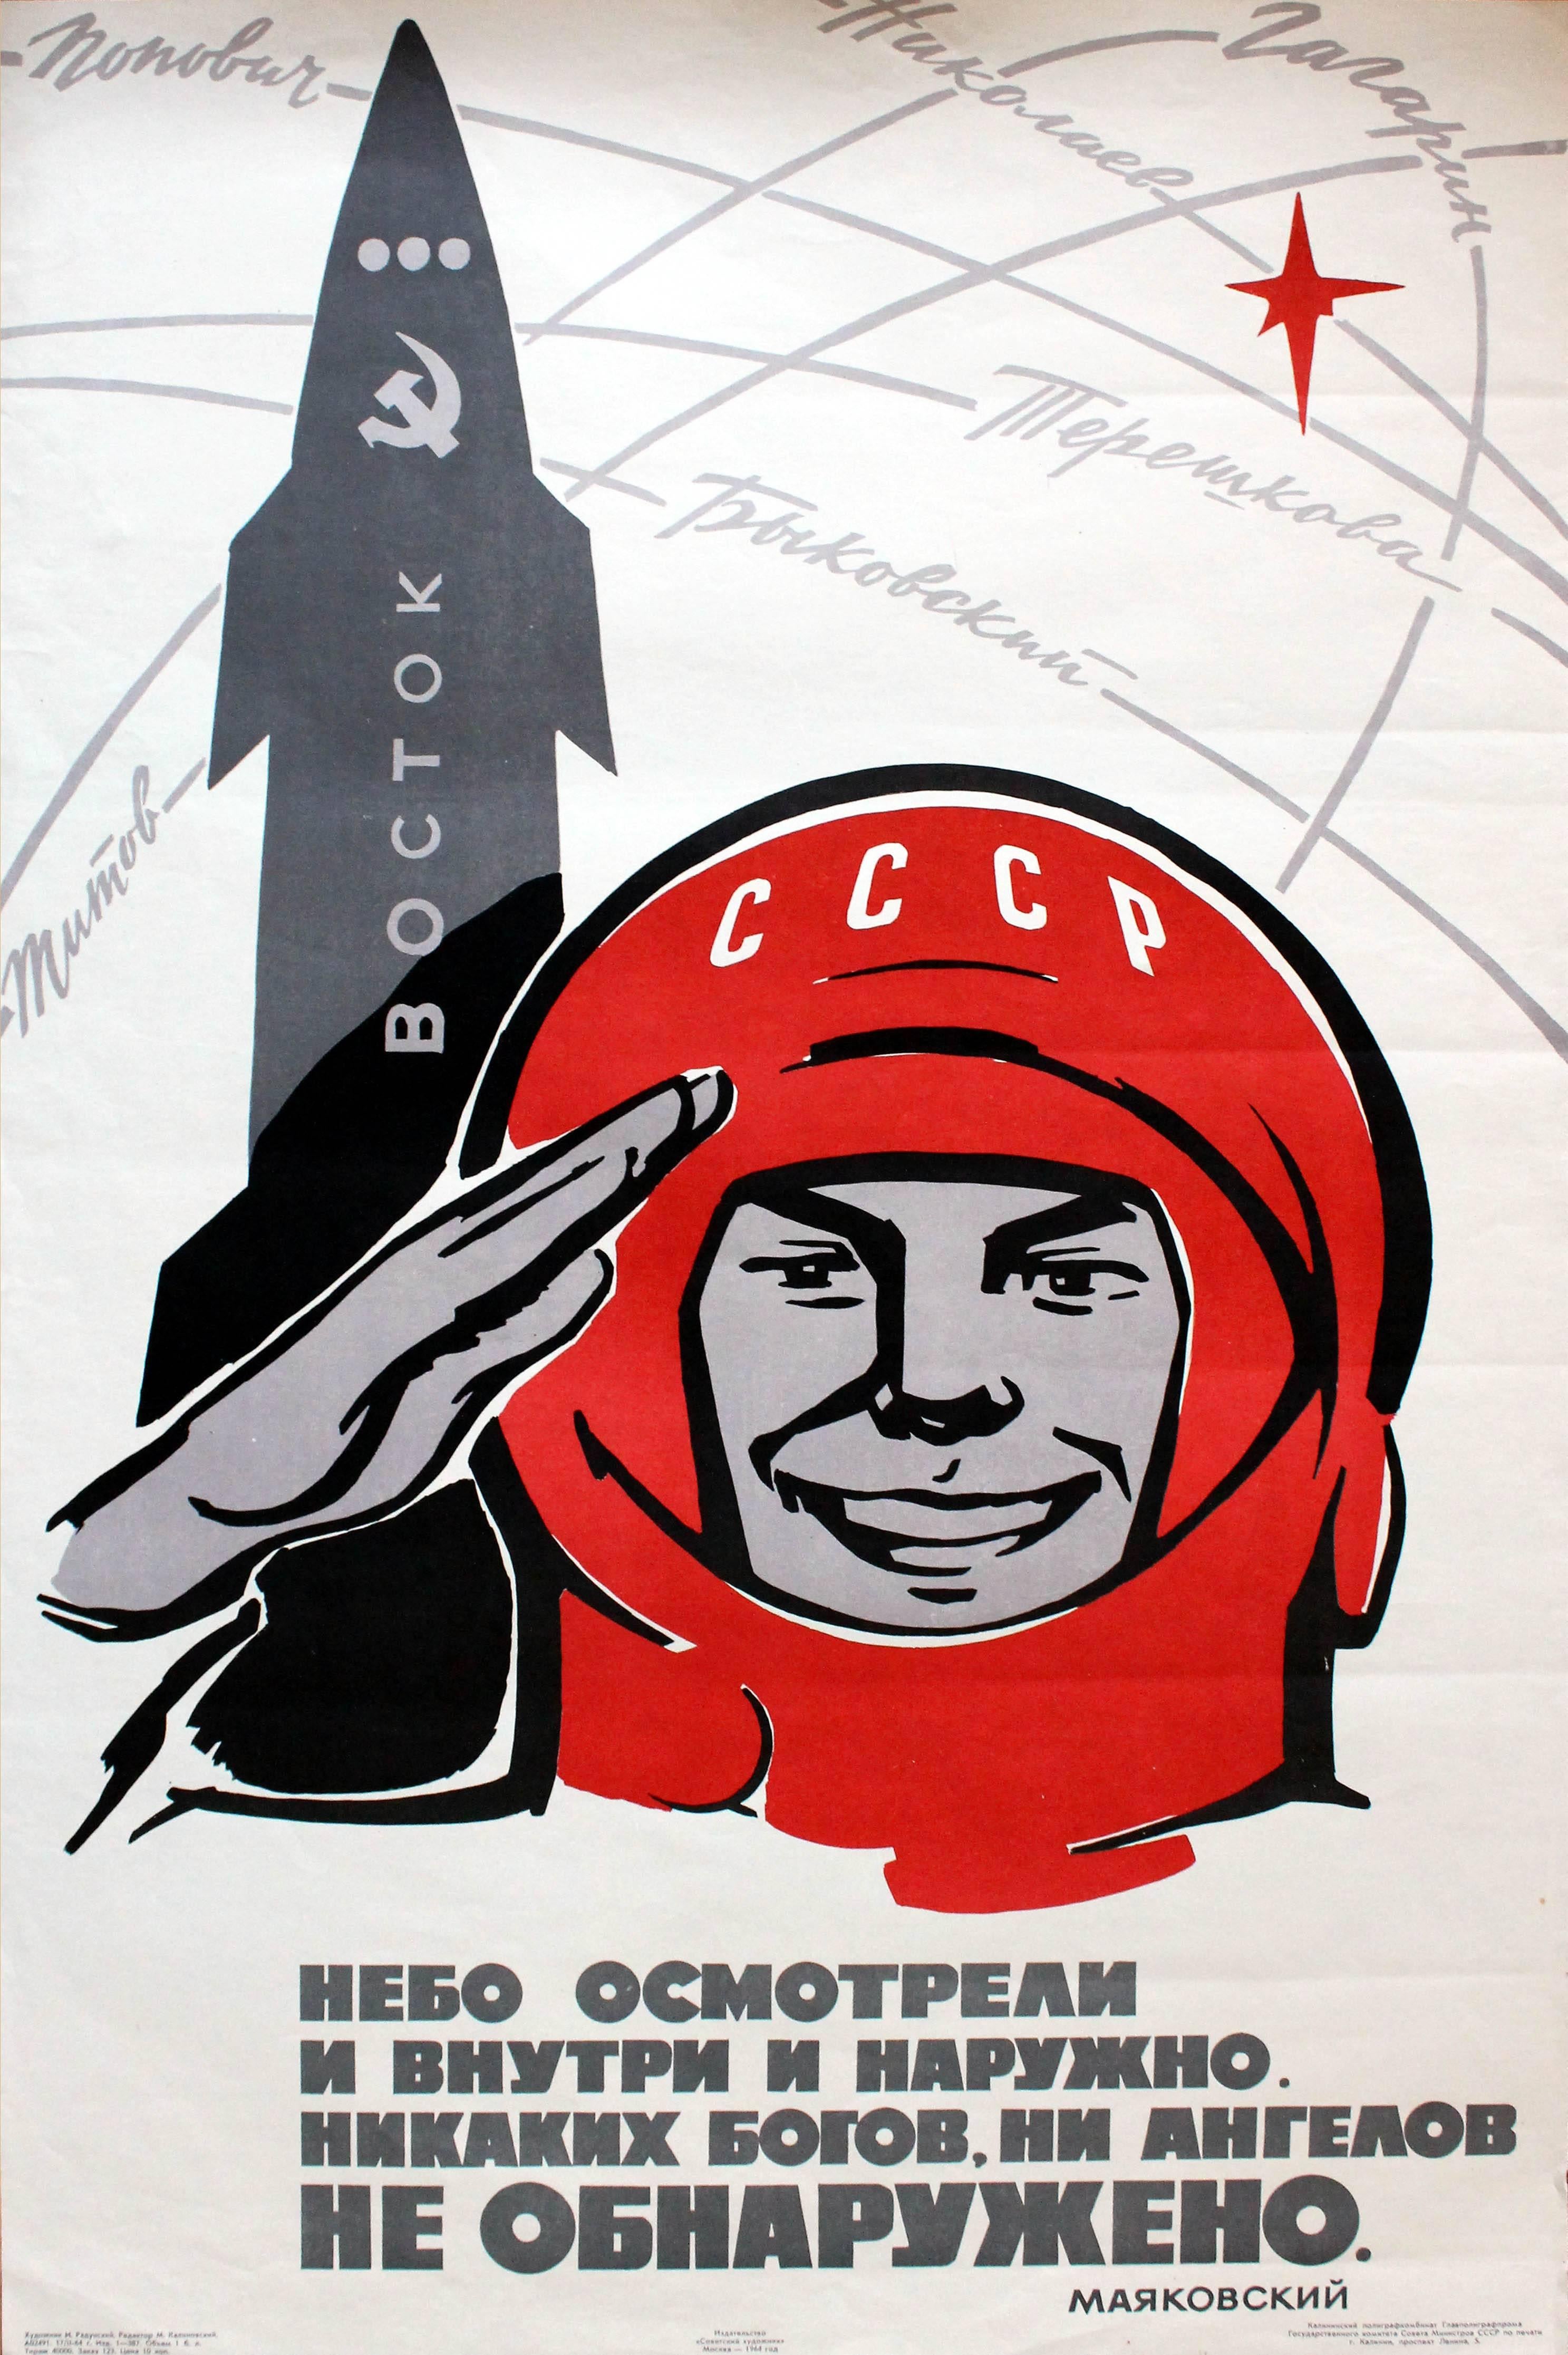 Original Vintage Soviet Space Propaganda Poster - Cosmonaut And Vostok Rocket